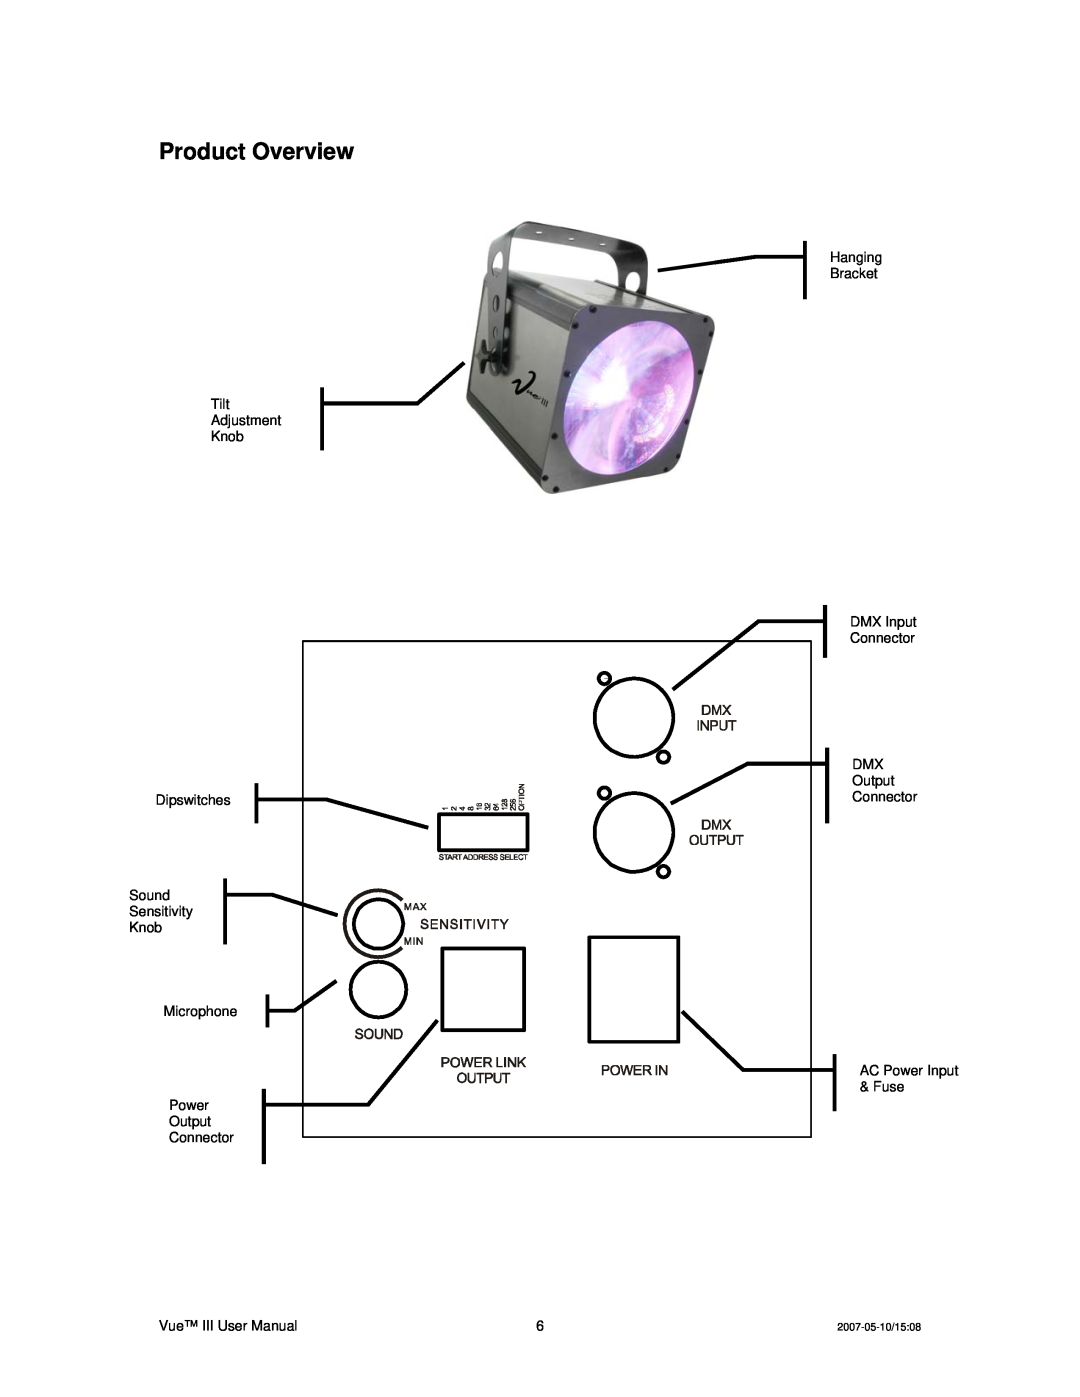 Chauvet Vue III Product Overview, Tilt Adjustment Knob Dipswitches Sound, Sensitivity Knob Microphone Power Output 